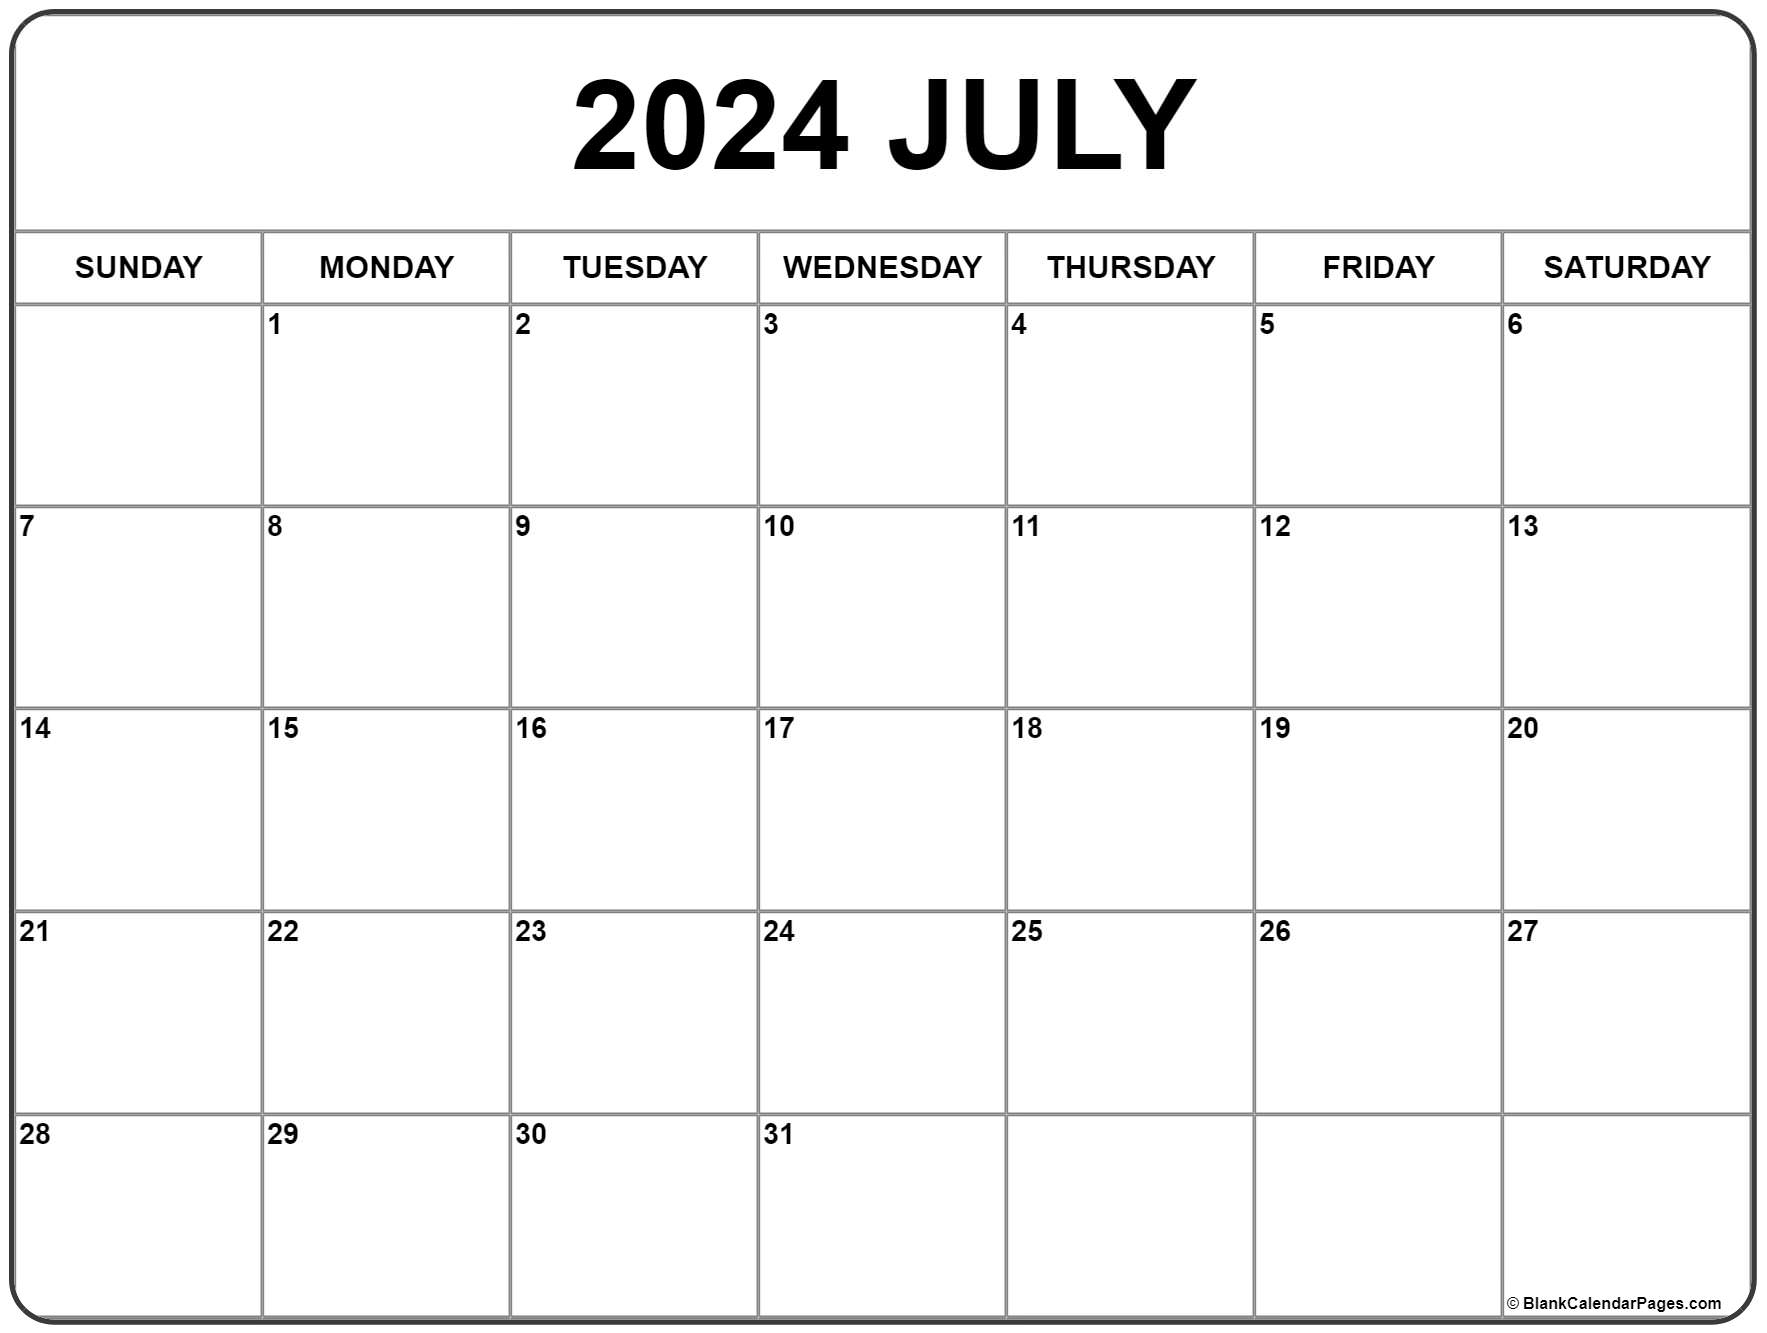 Blank July 2021 Calendar July 2021 calendar | free printable monthly calendars